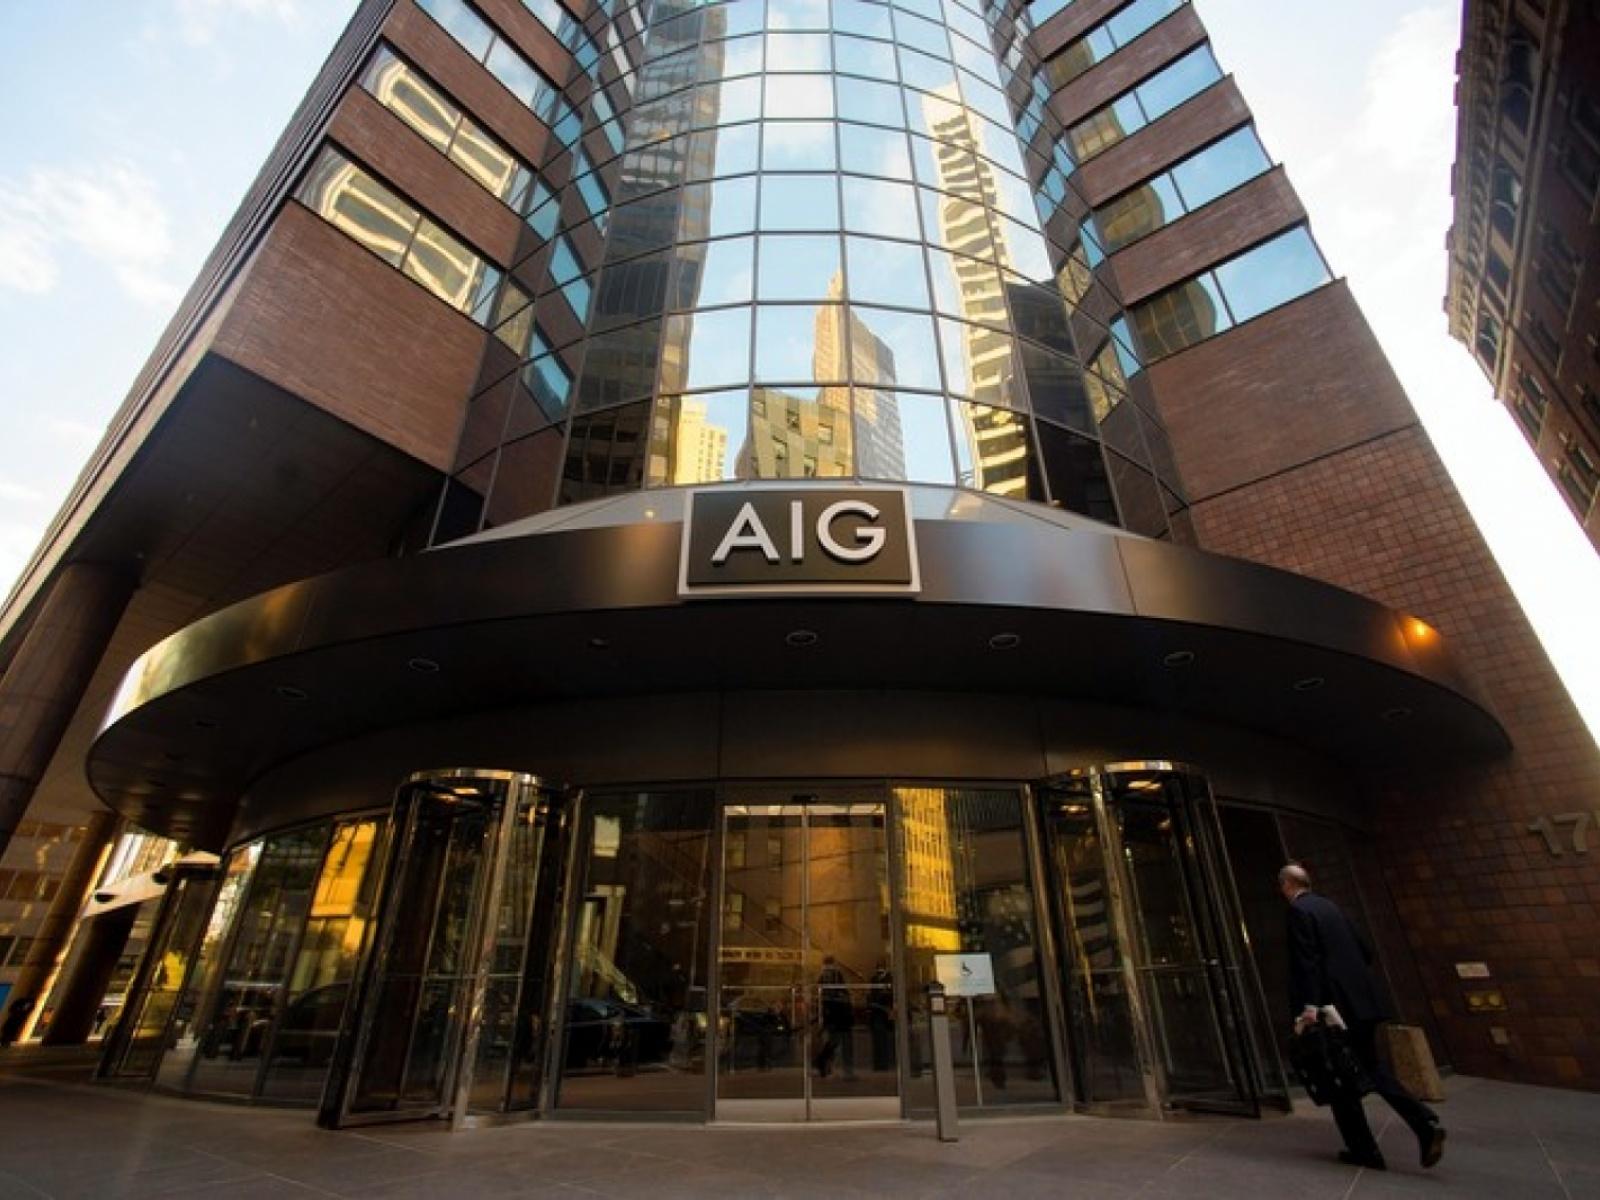 AIG corporate signage